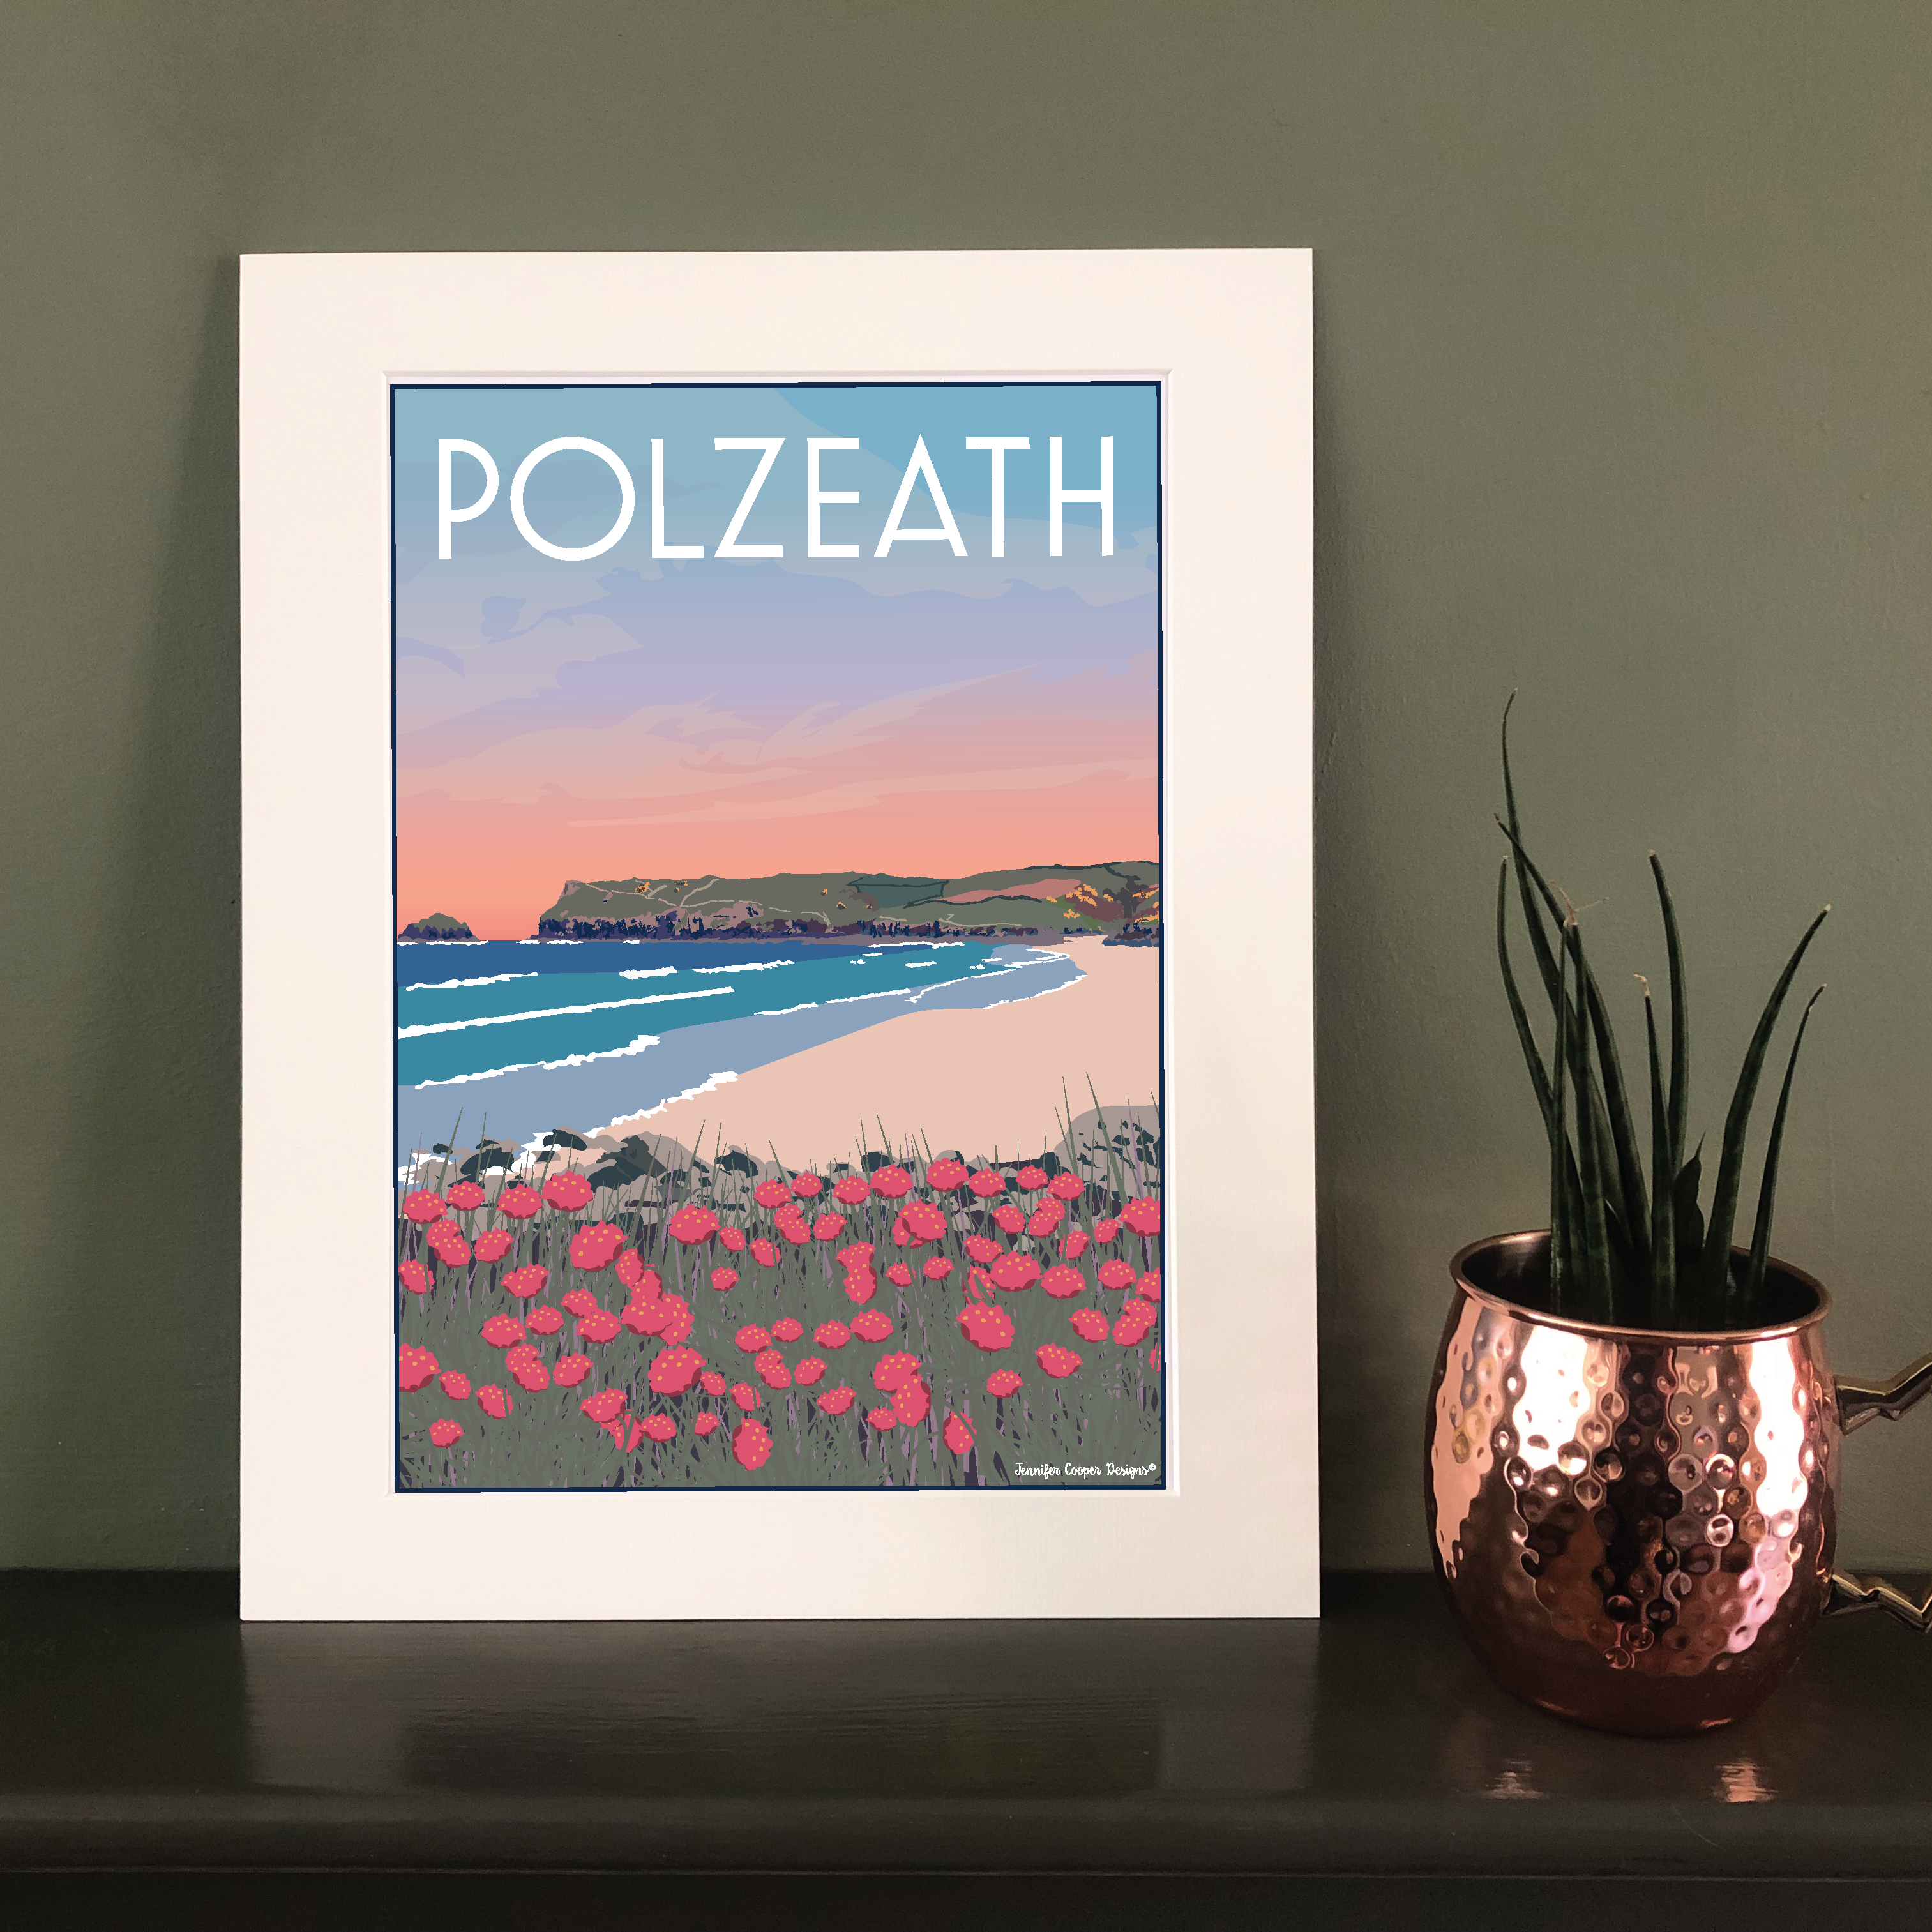 Polzeath